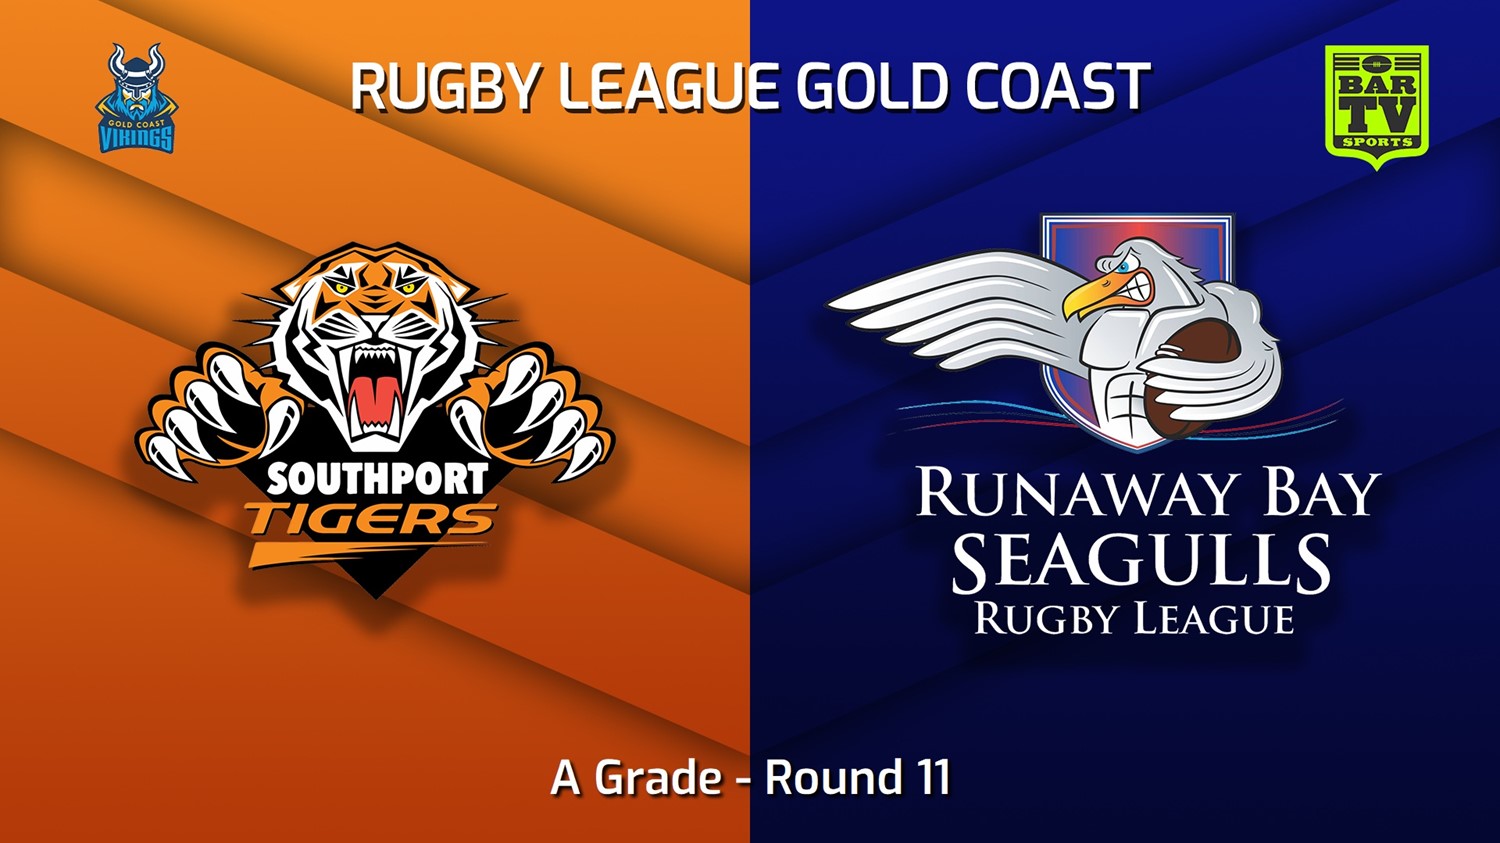 220619-Gold Coast Round 11 - A Grade - Southport Tigers v Runaway Bay Seagulls Minigame Slate Image